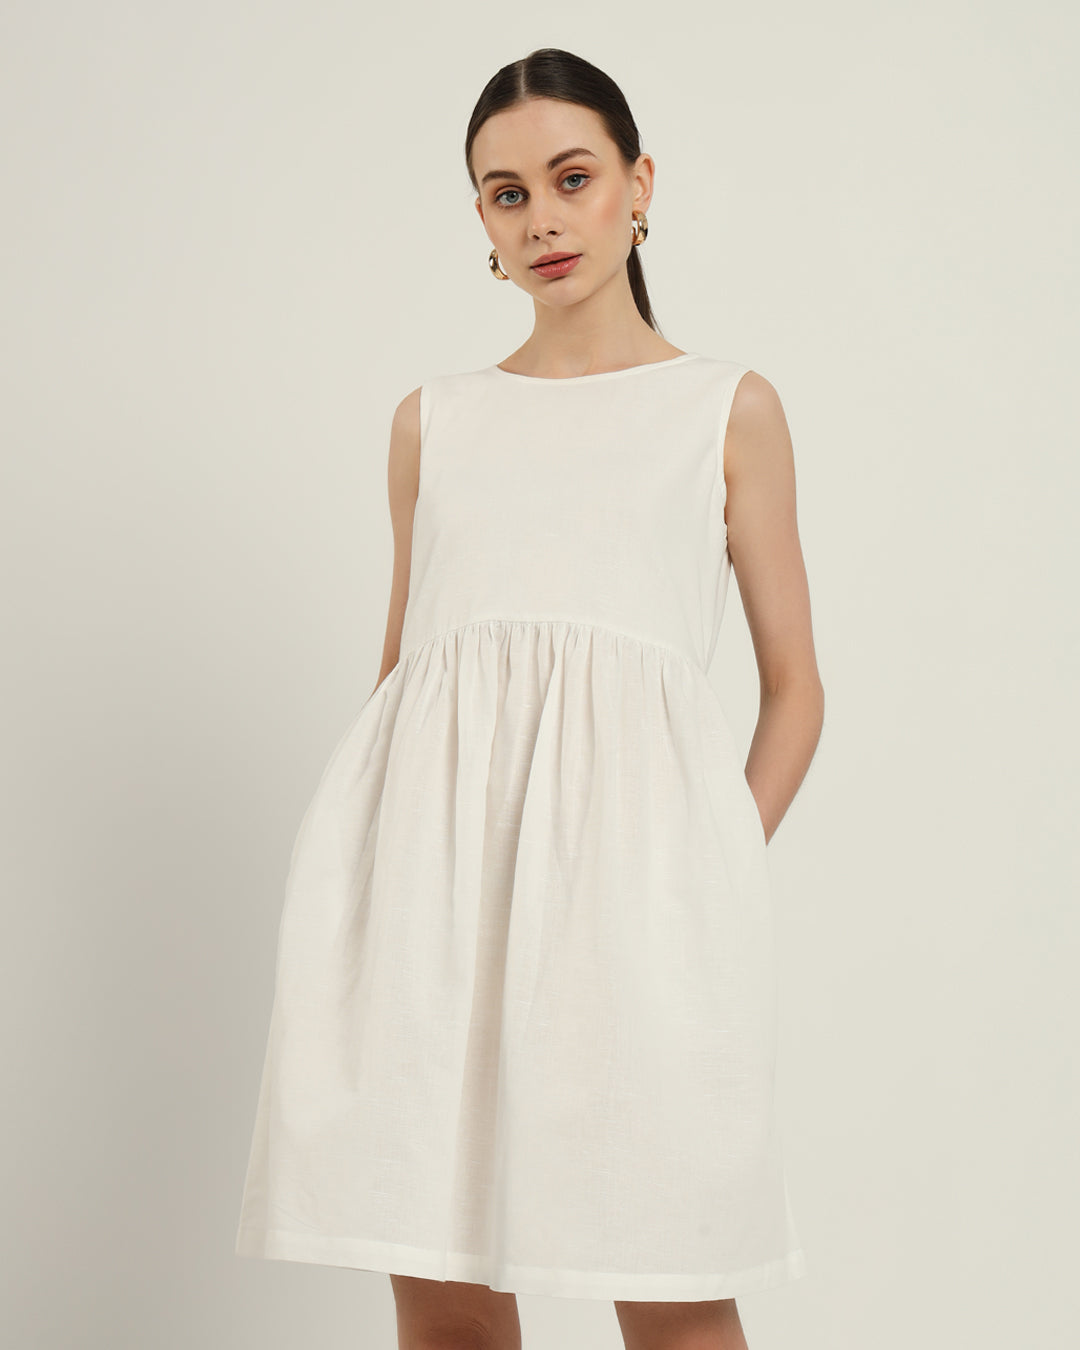 The Chania Daisy White Linen Dress